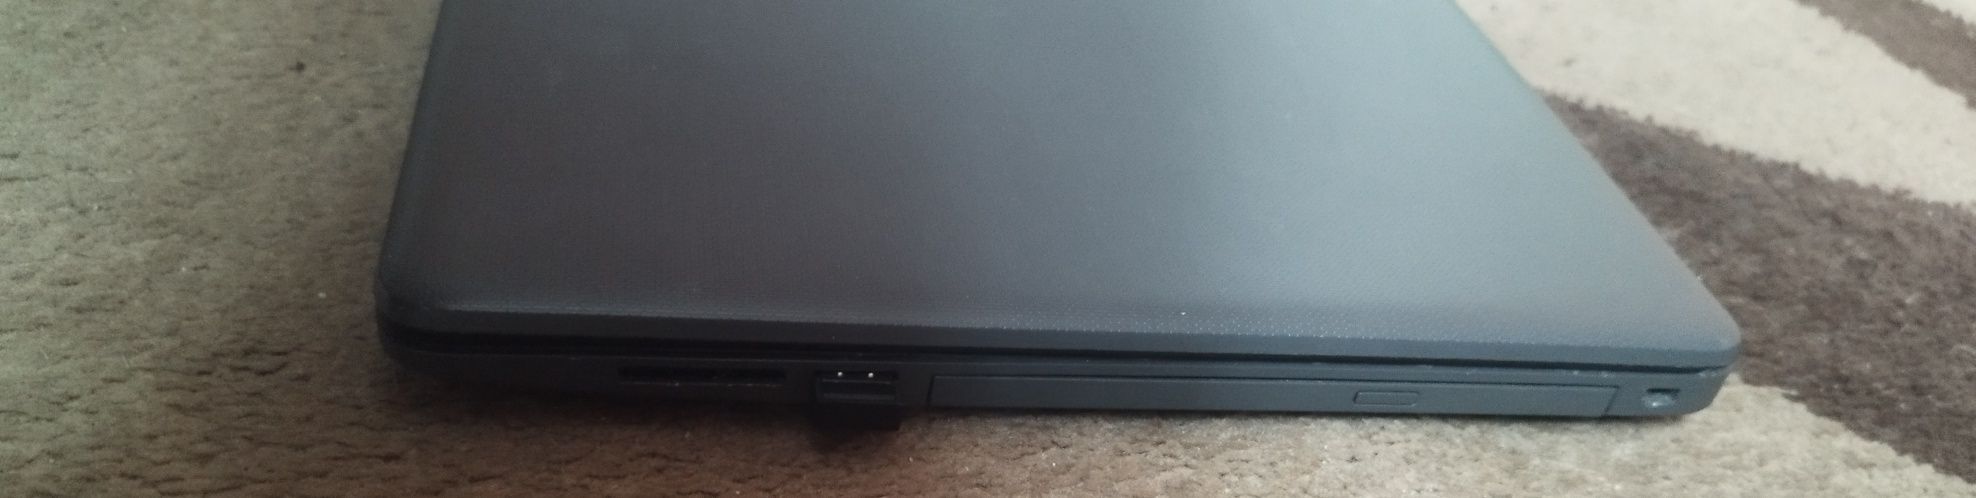 Laptop HP 250 G7 8GB 4x2,40 Ghz